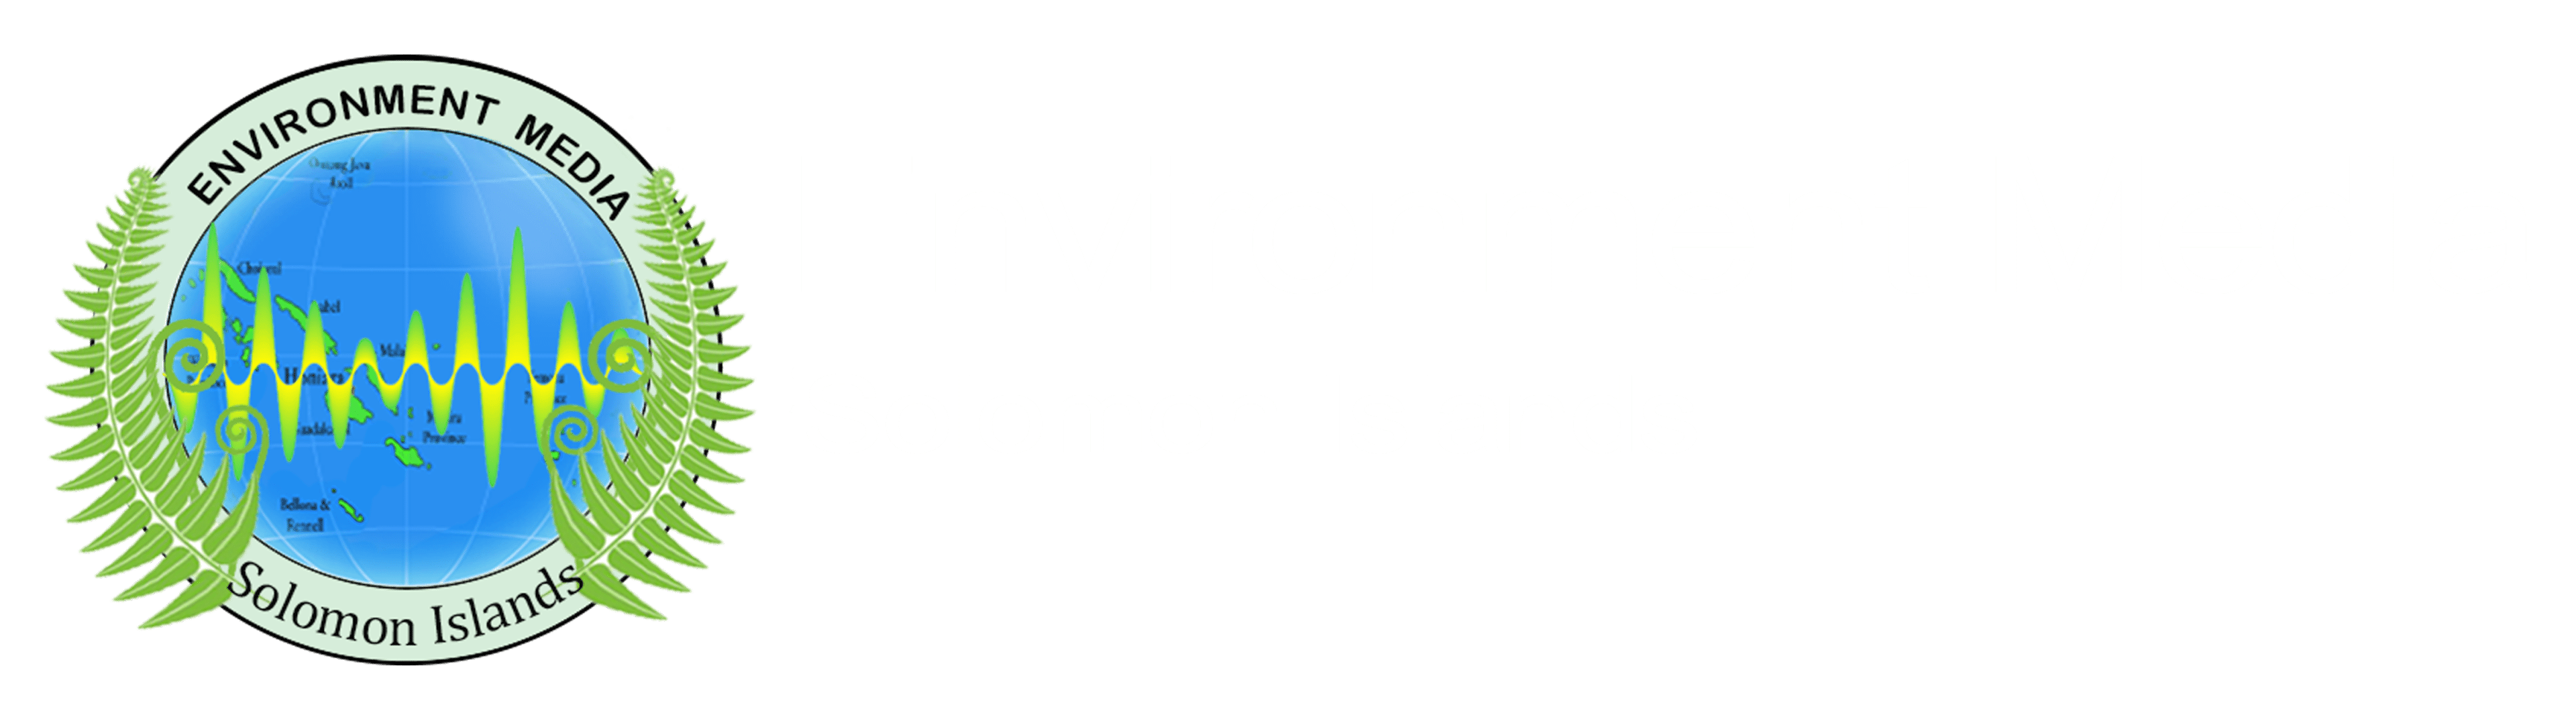 Environment Media